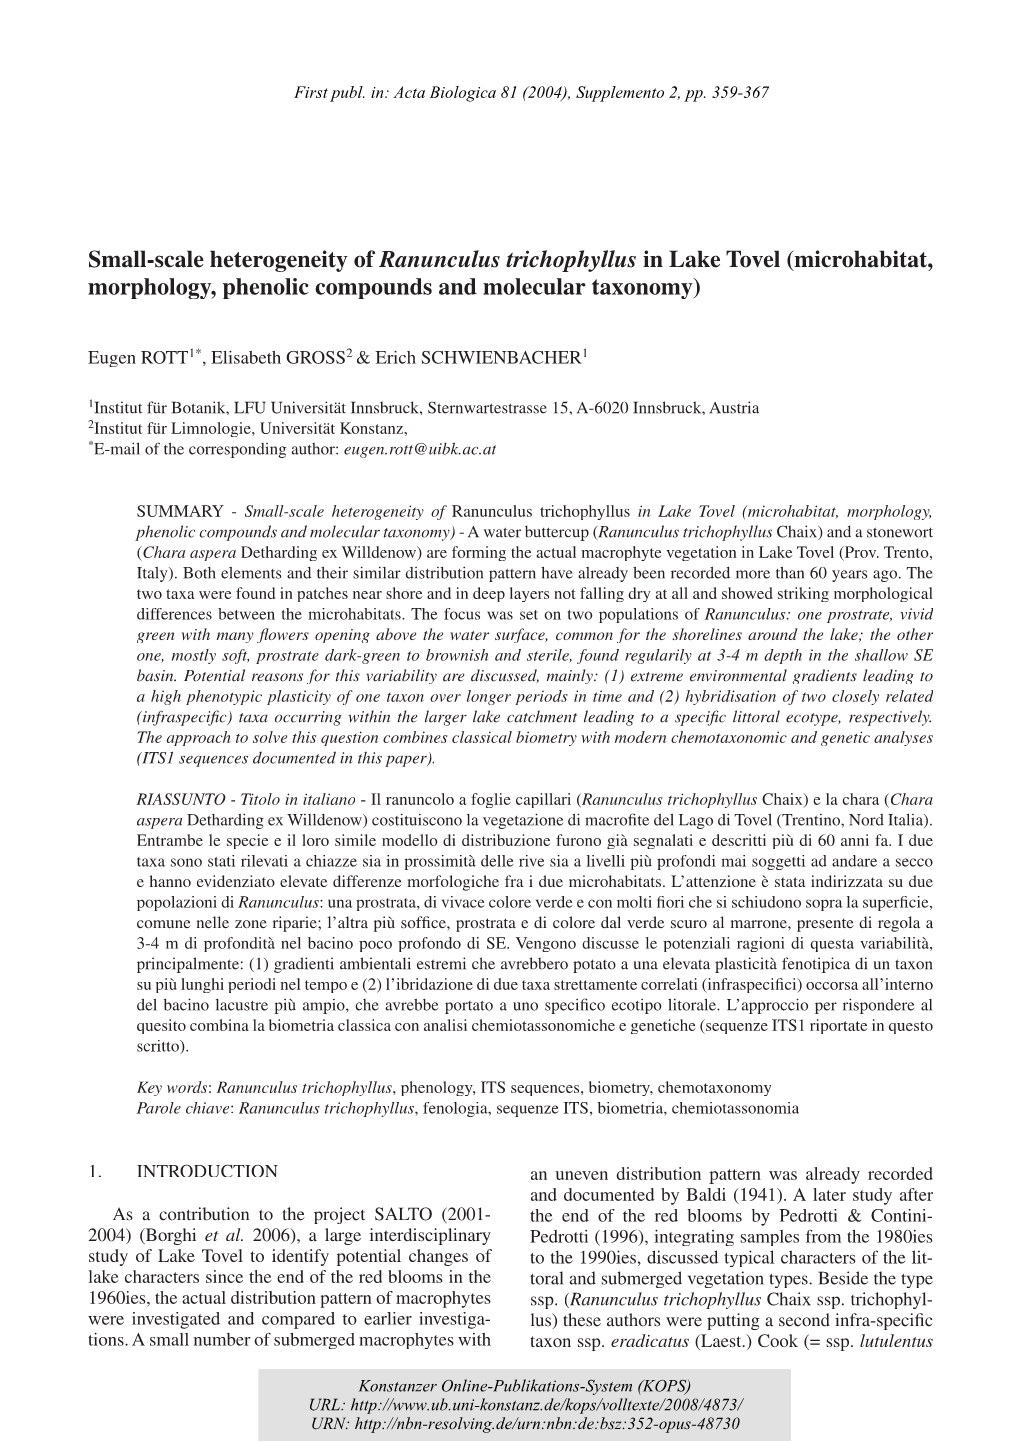 Small-Scale Heterogeneity of Ranunculus Trichophyllus in Lake Tovel (Microhabitat, Morphology, Phenolic Compounds and Molecular Taxonomy)